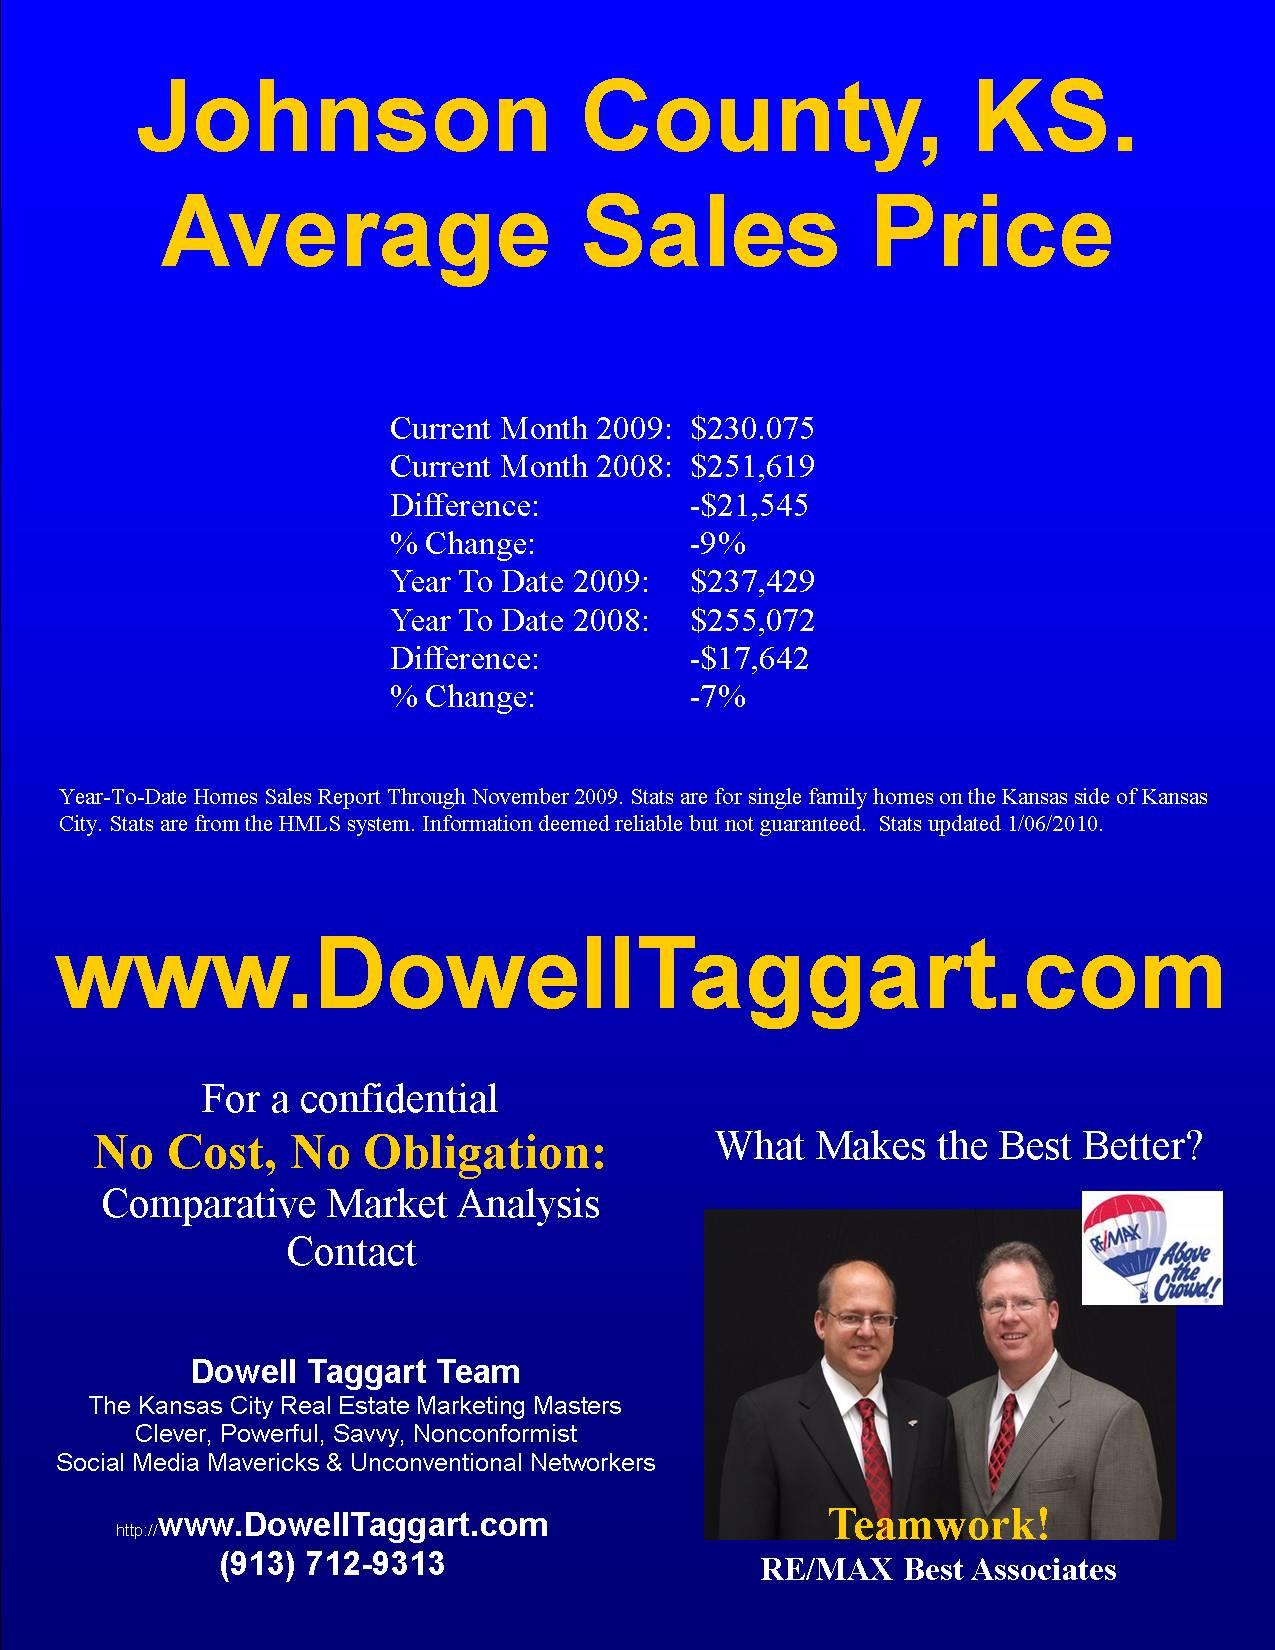 Johnson County Average Sales Price